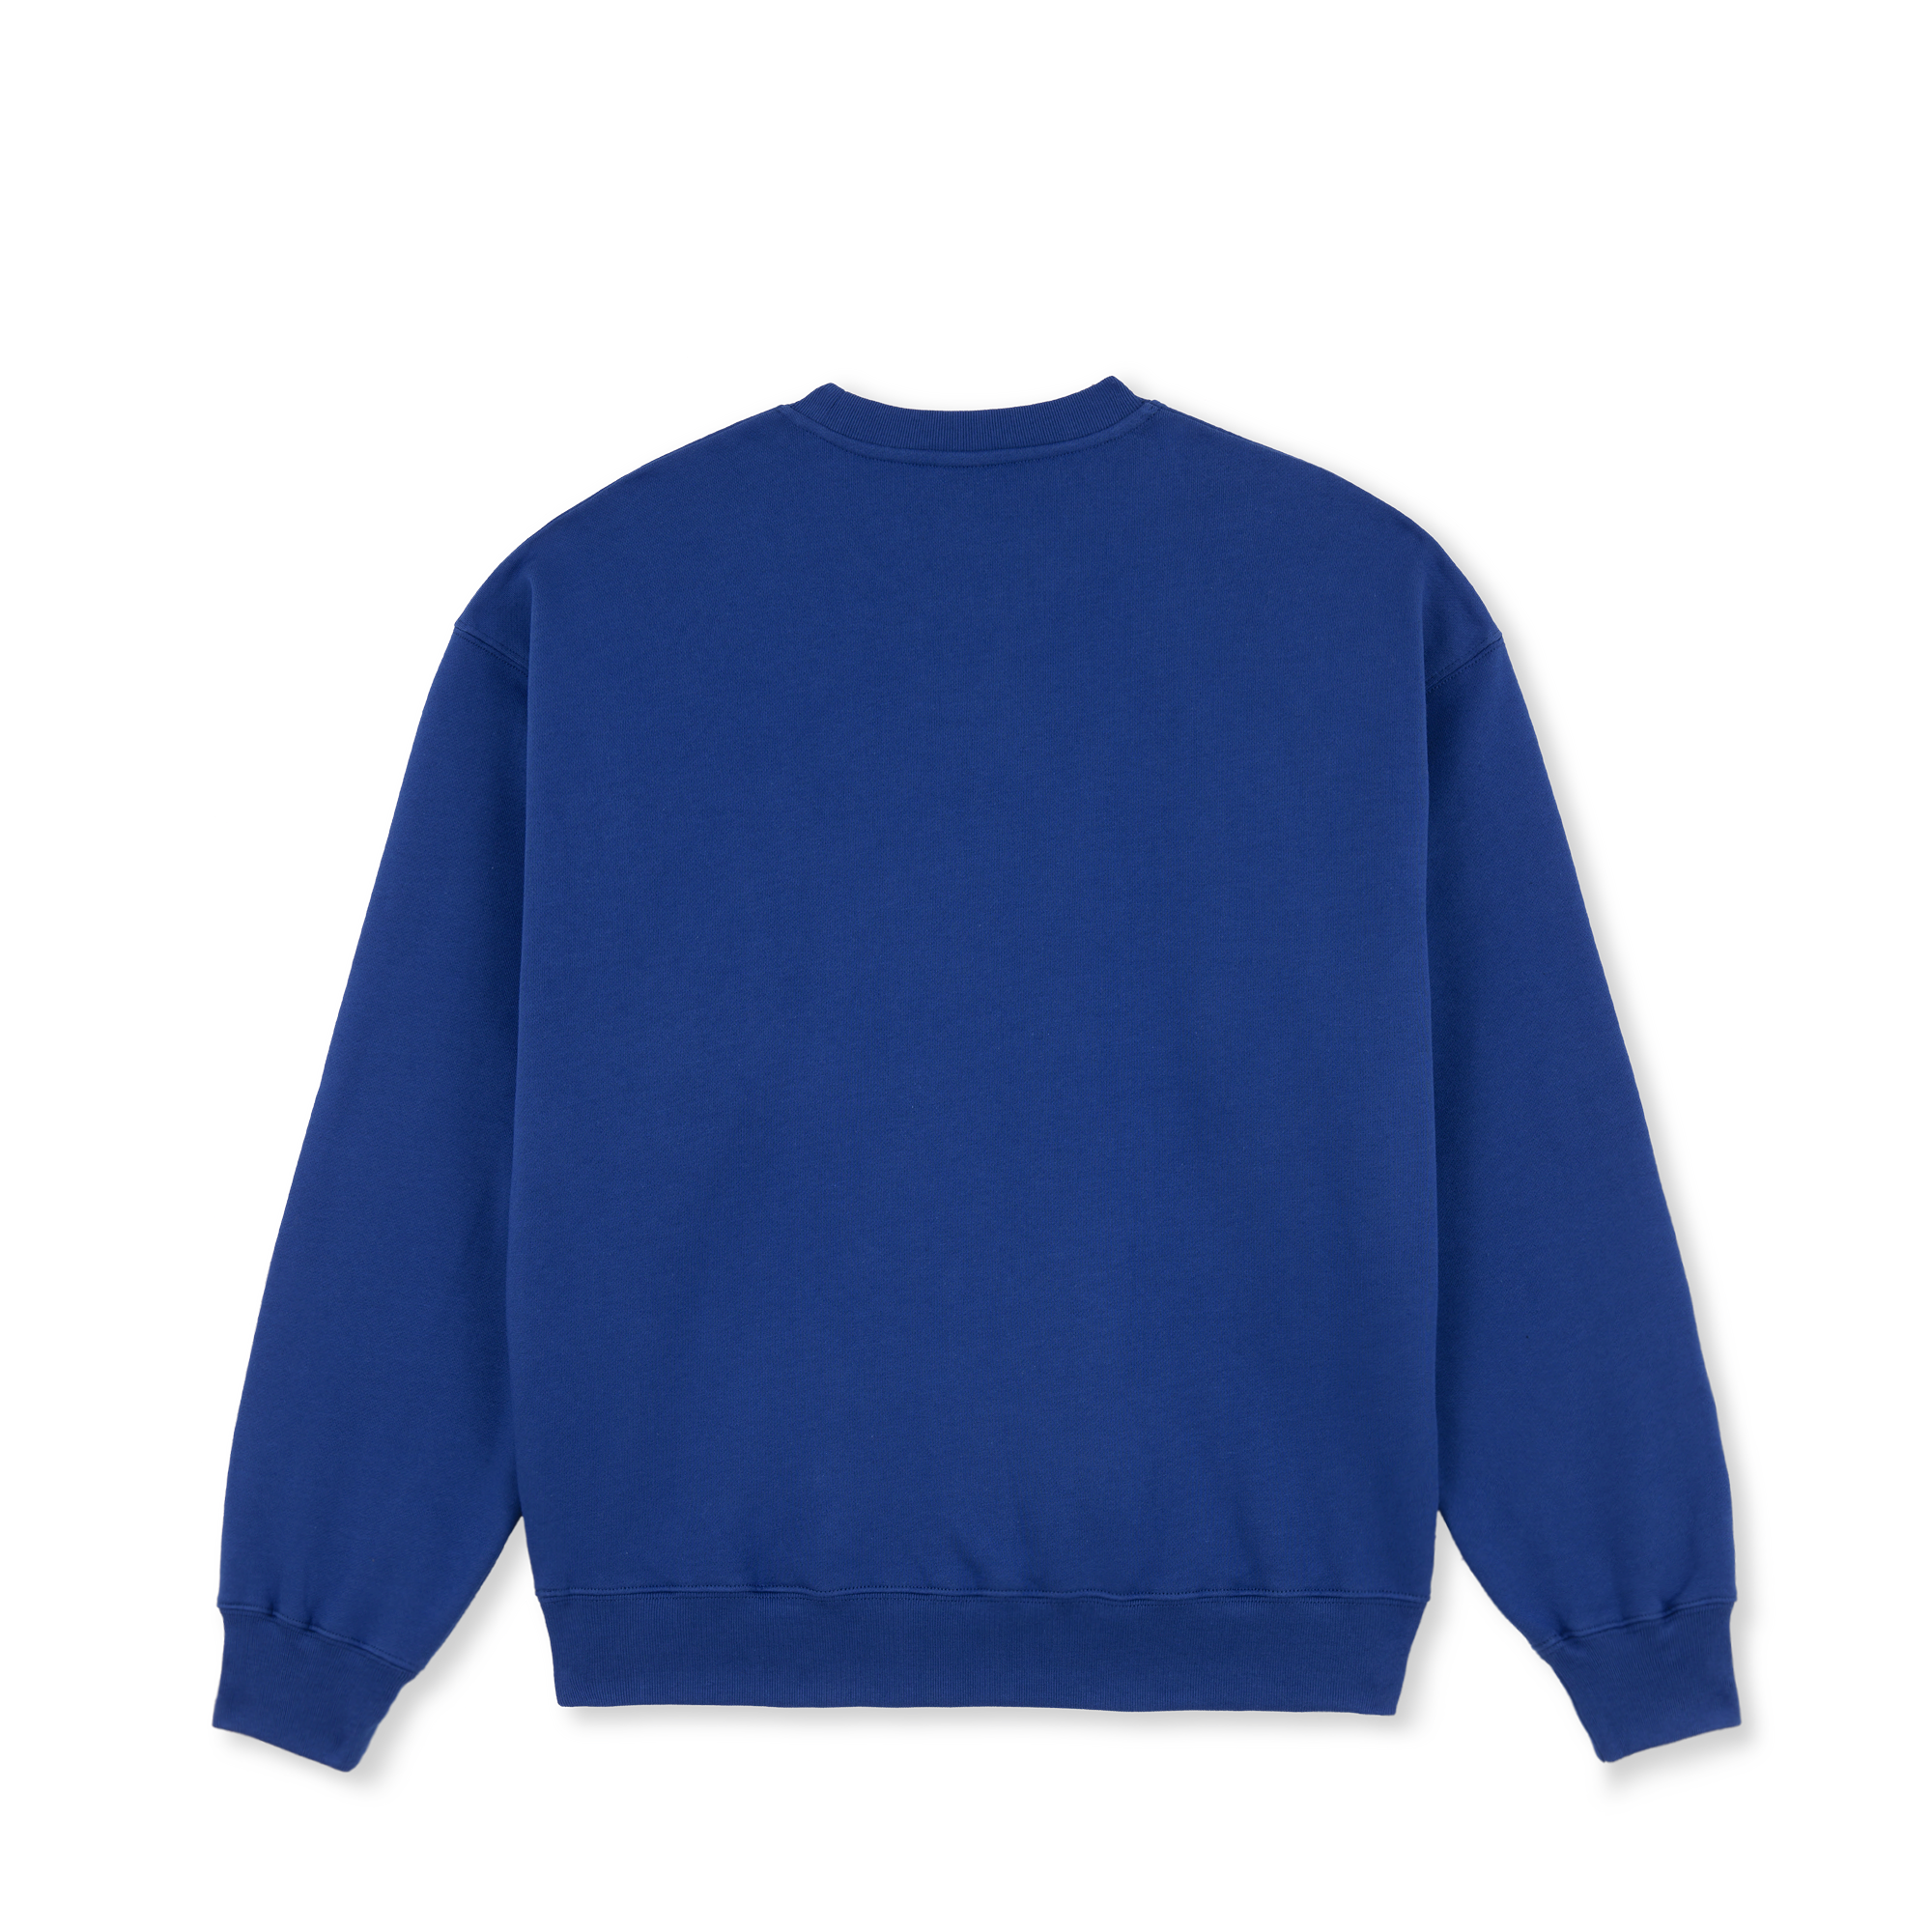 Deep blue polar Crewneck sweatshirt with orange logo on front. Free uk shipping on orders over £50